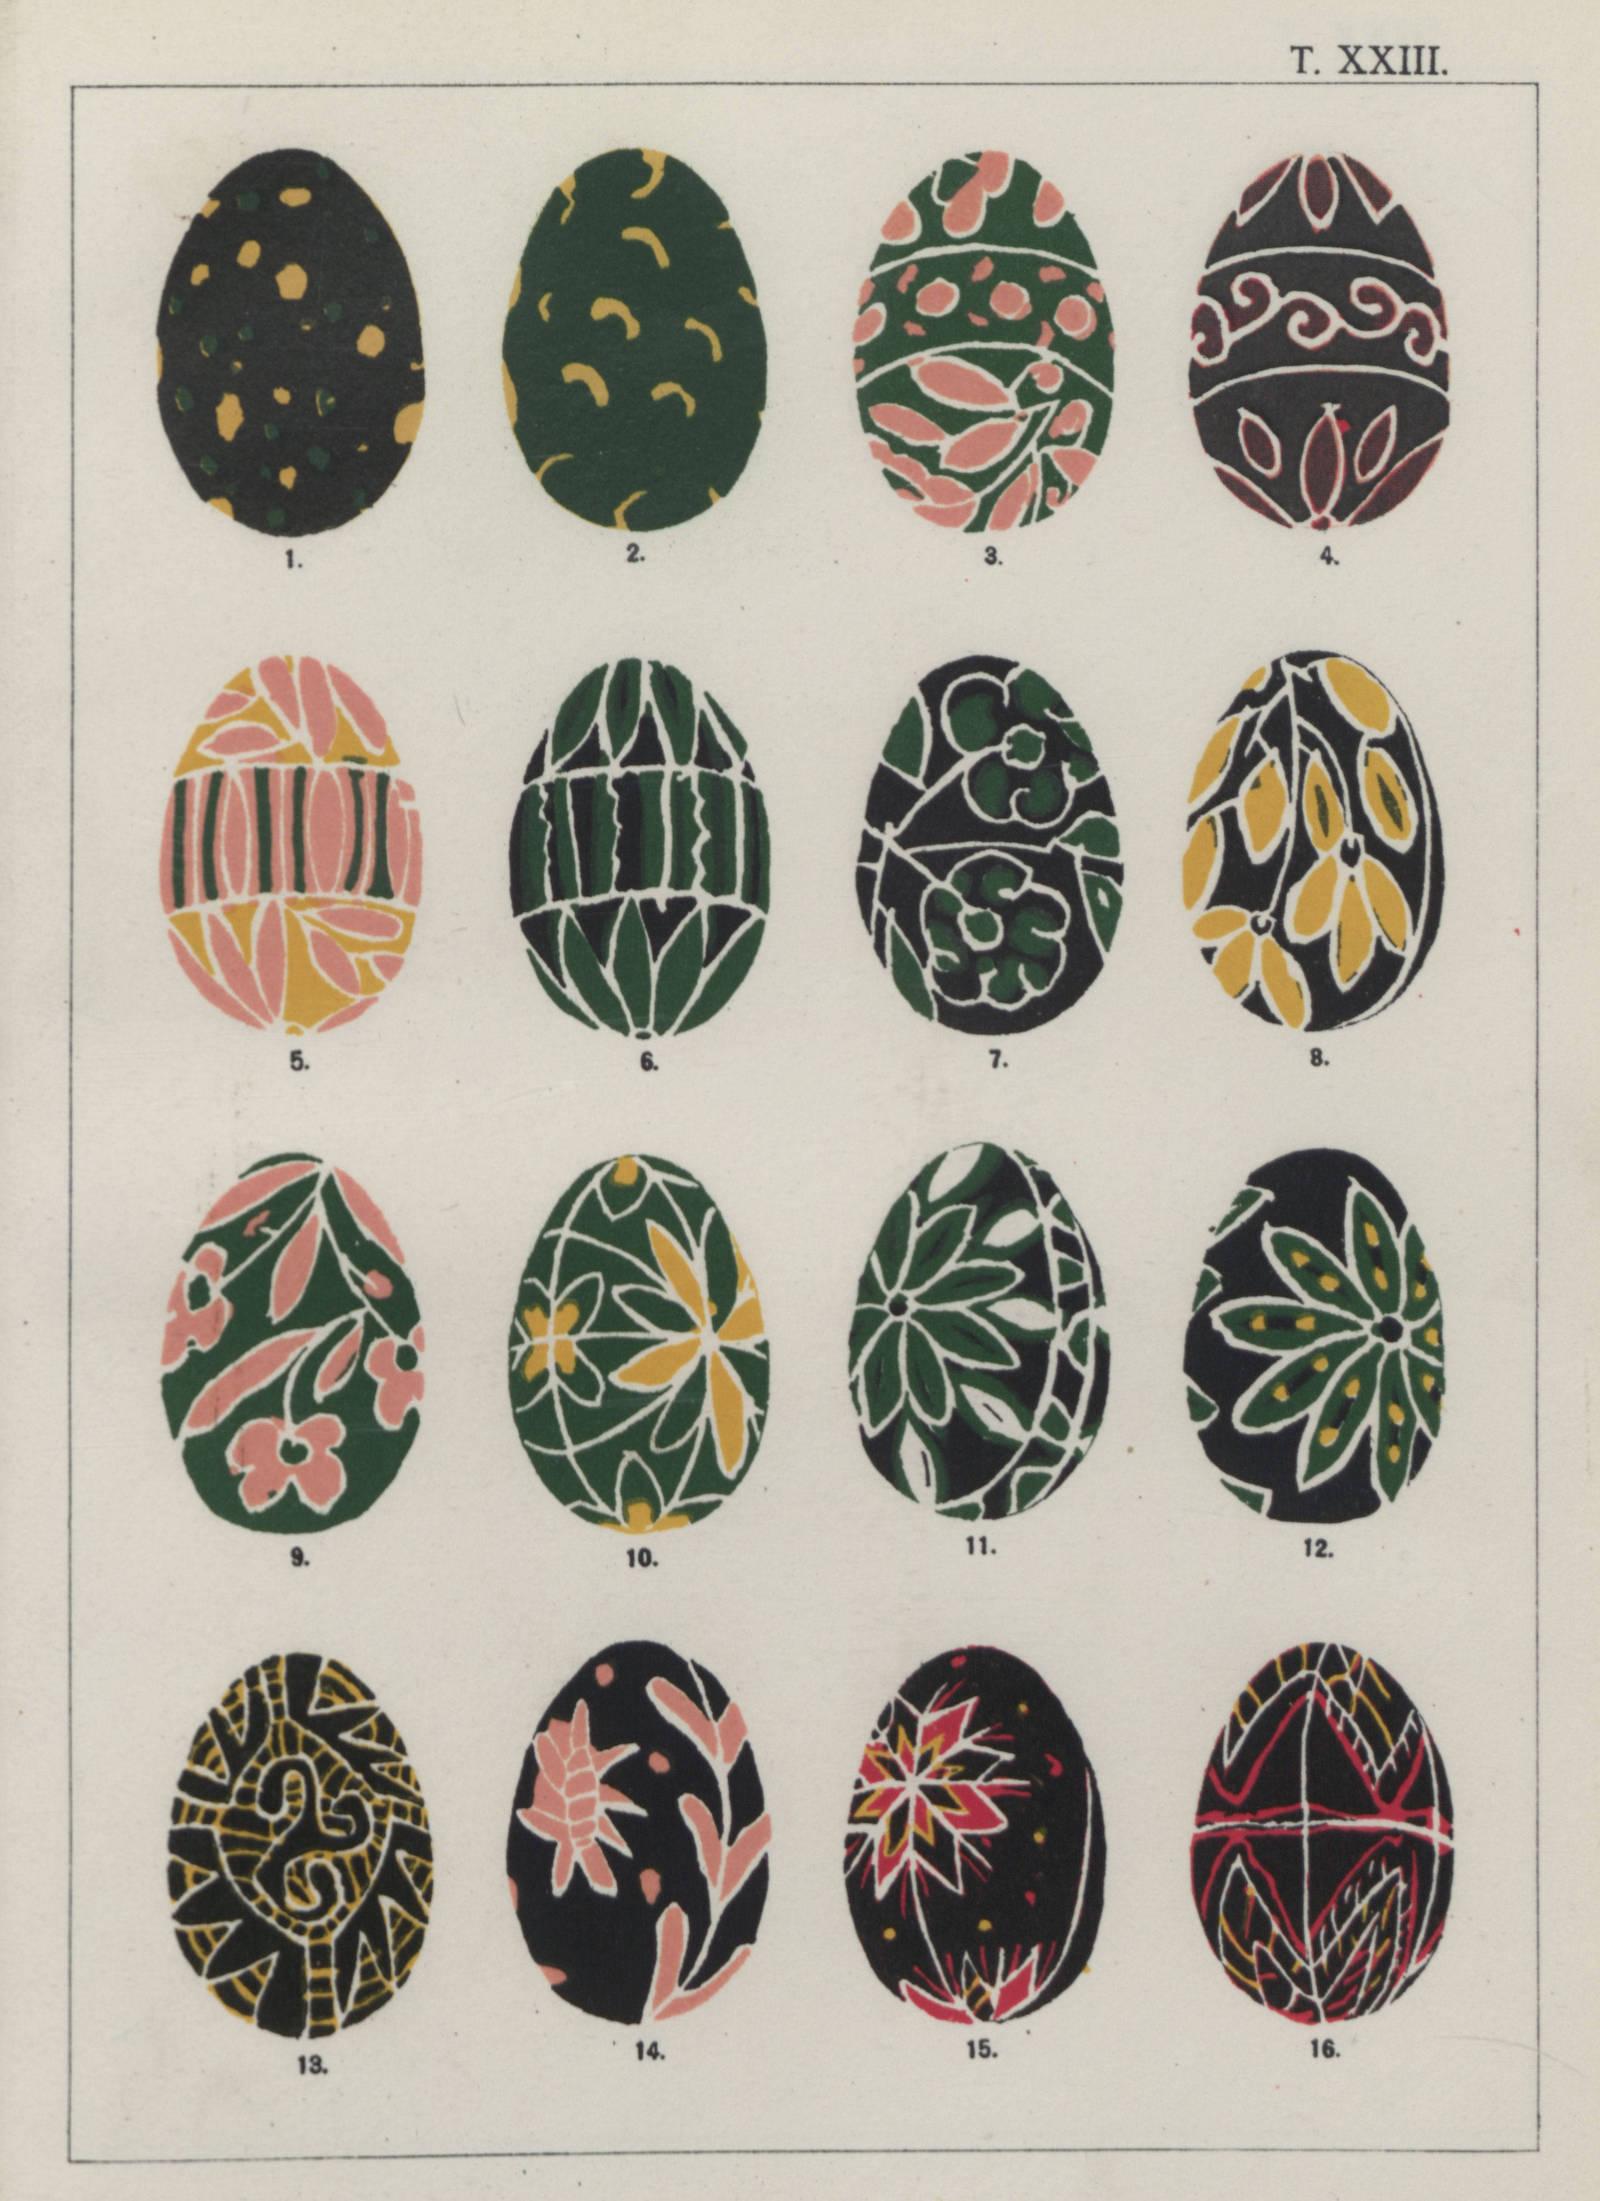 Primarily green, black, white and purple pysanky designs. plate 23 of Opisanīe kollektsii narodnykh pisanok, 1899